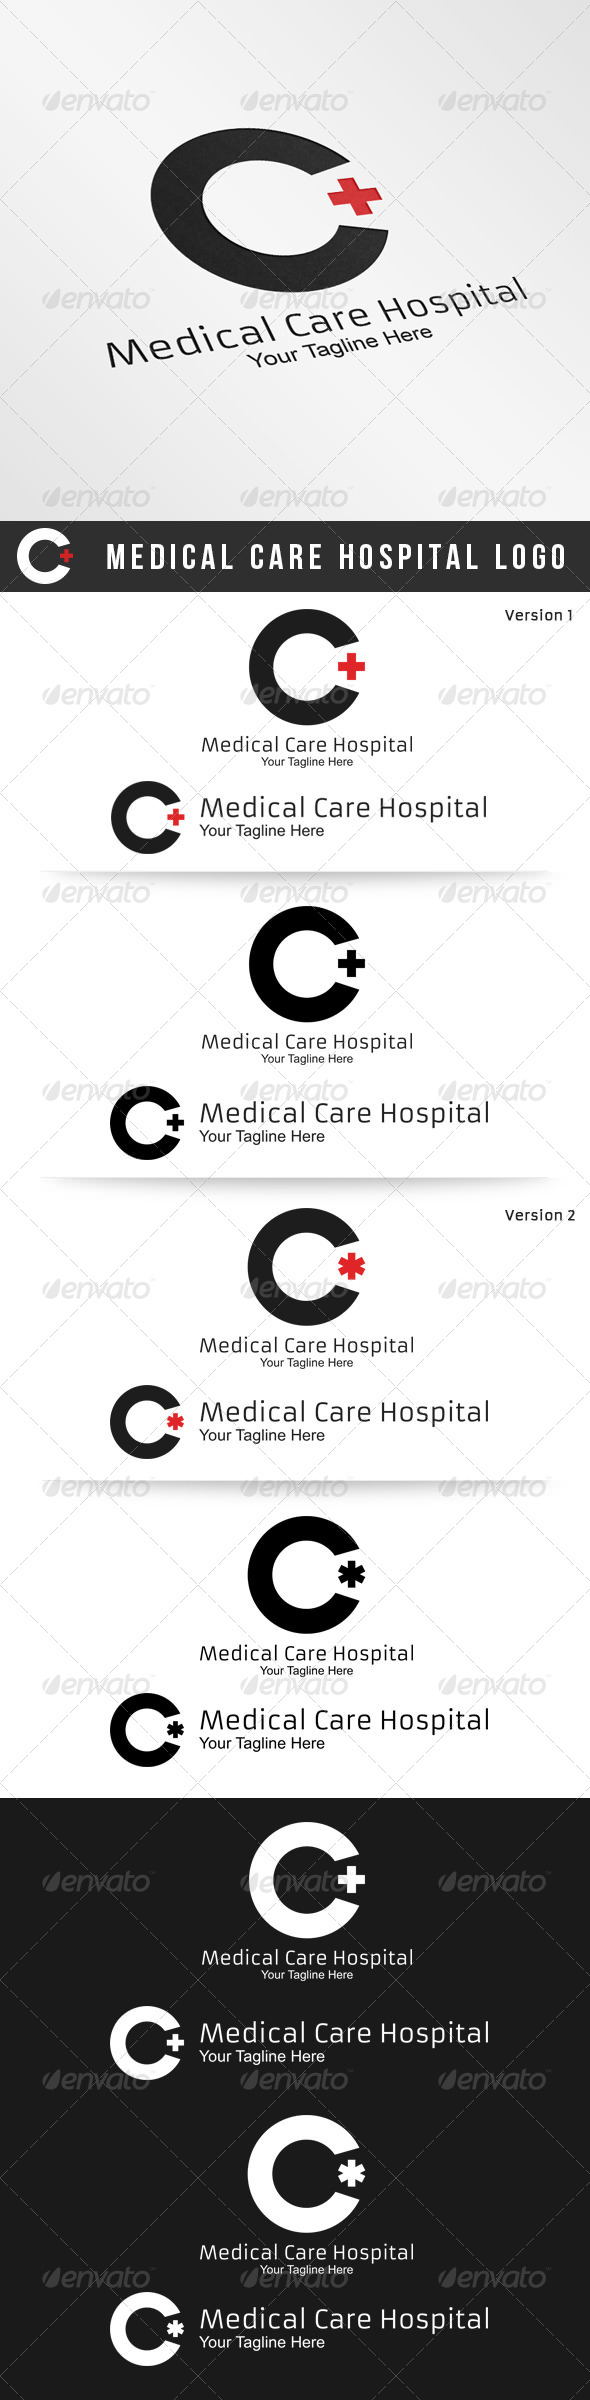 Medical Care Hospital Logo Template